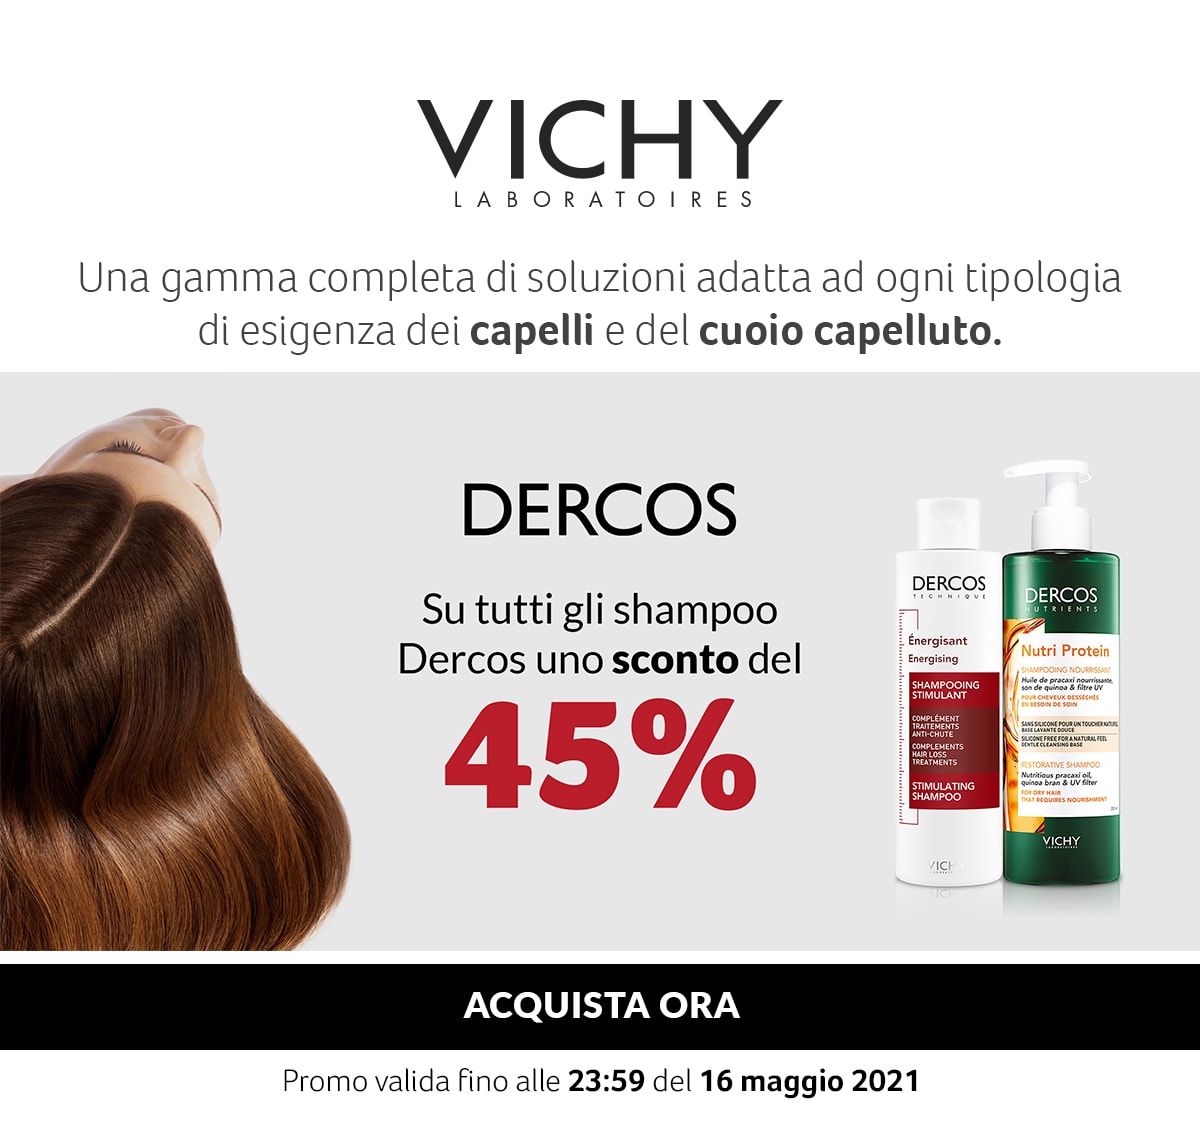 Vichy Dercos. -45% su TUTTI gli shampoo Dercos